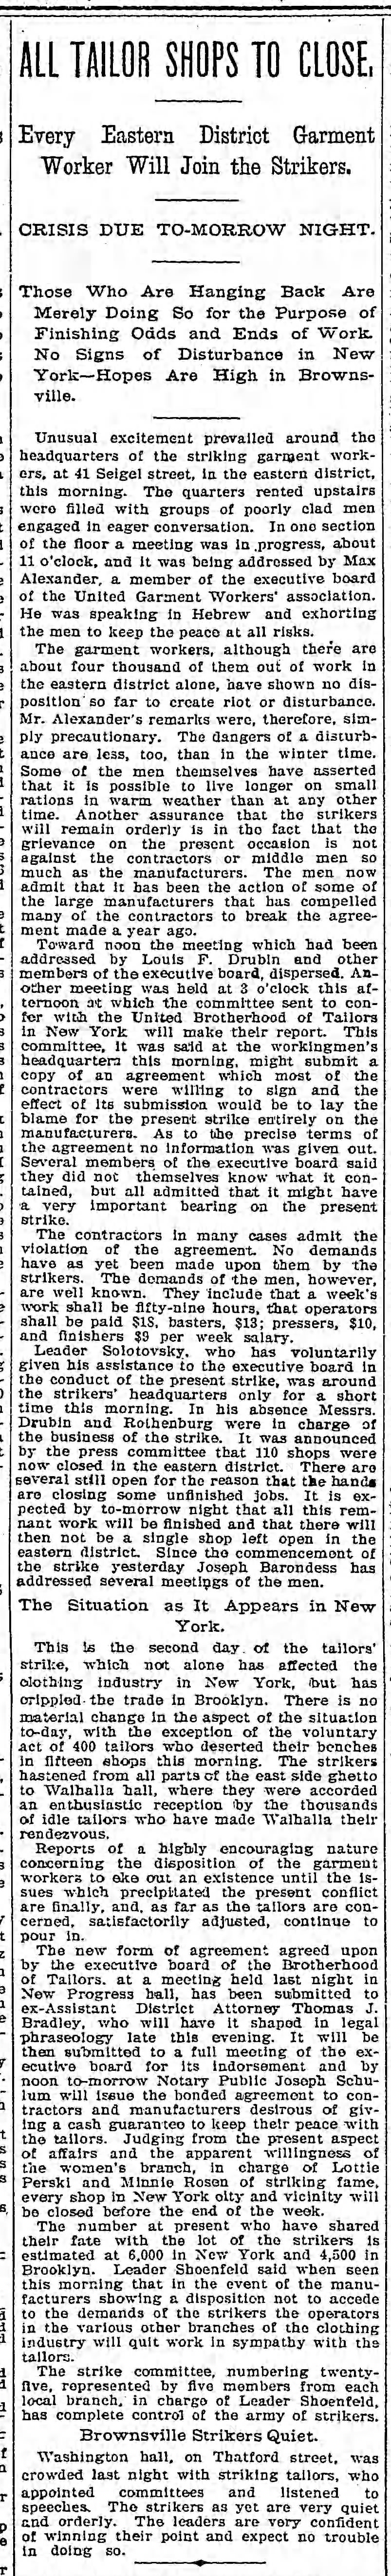 Tailor Strike, 1896 July 23